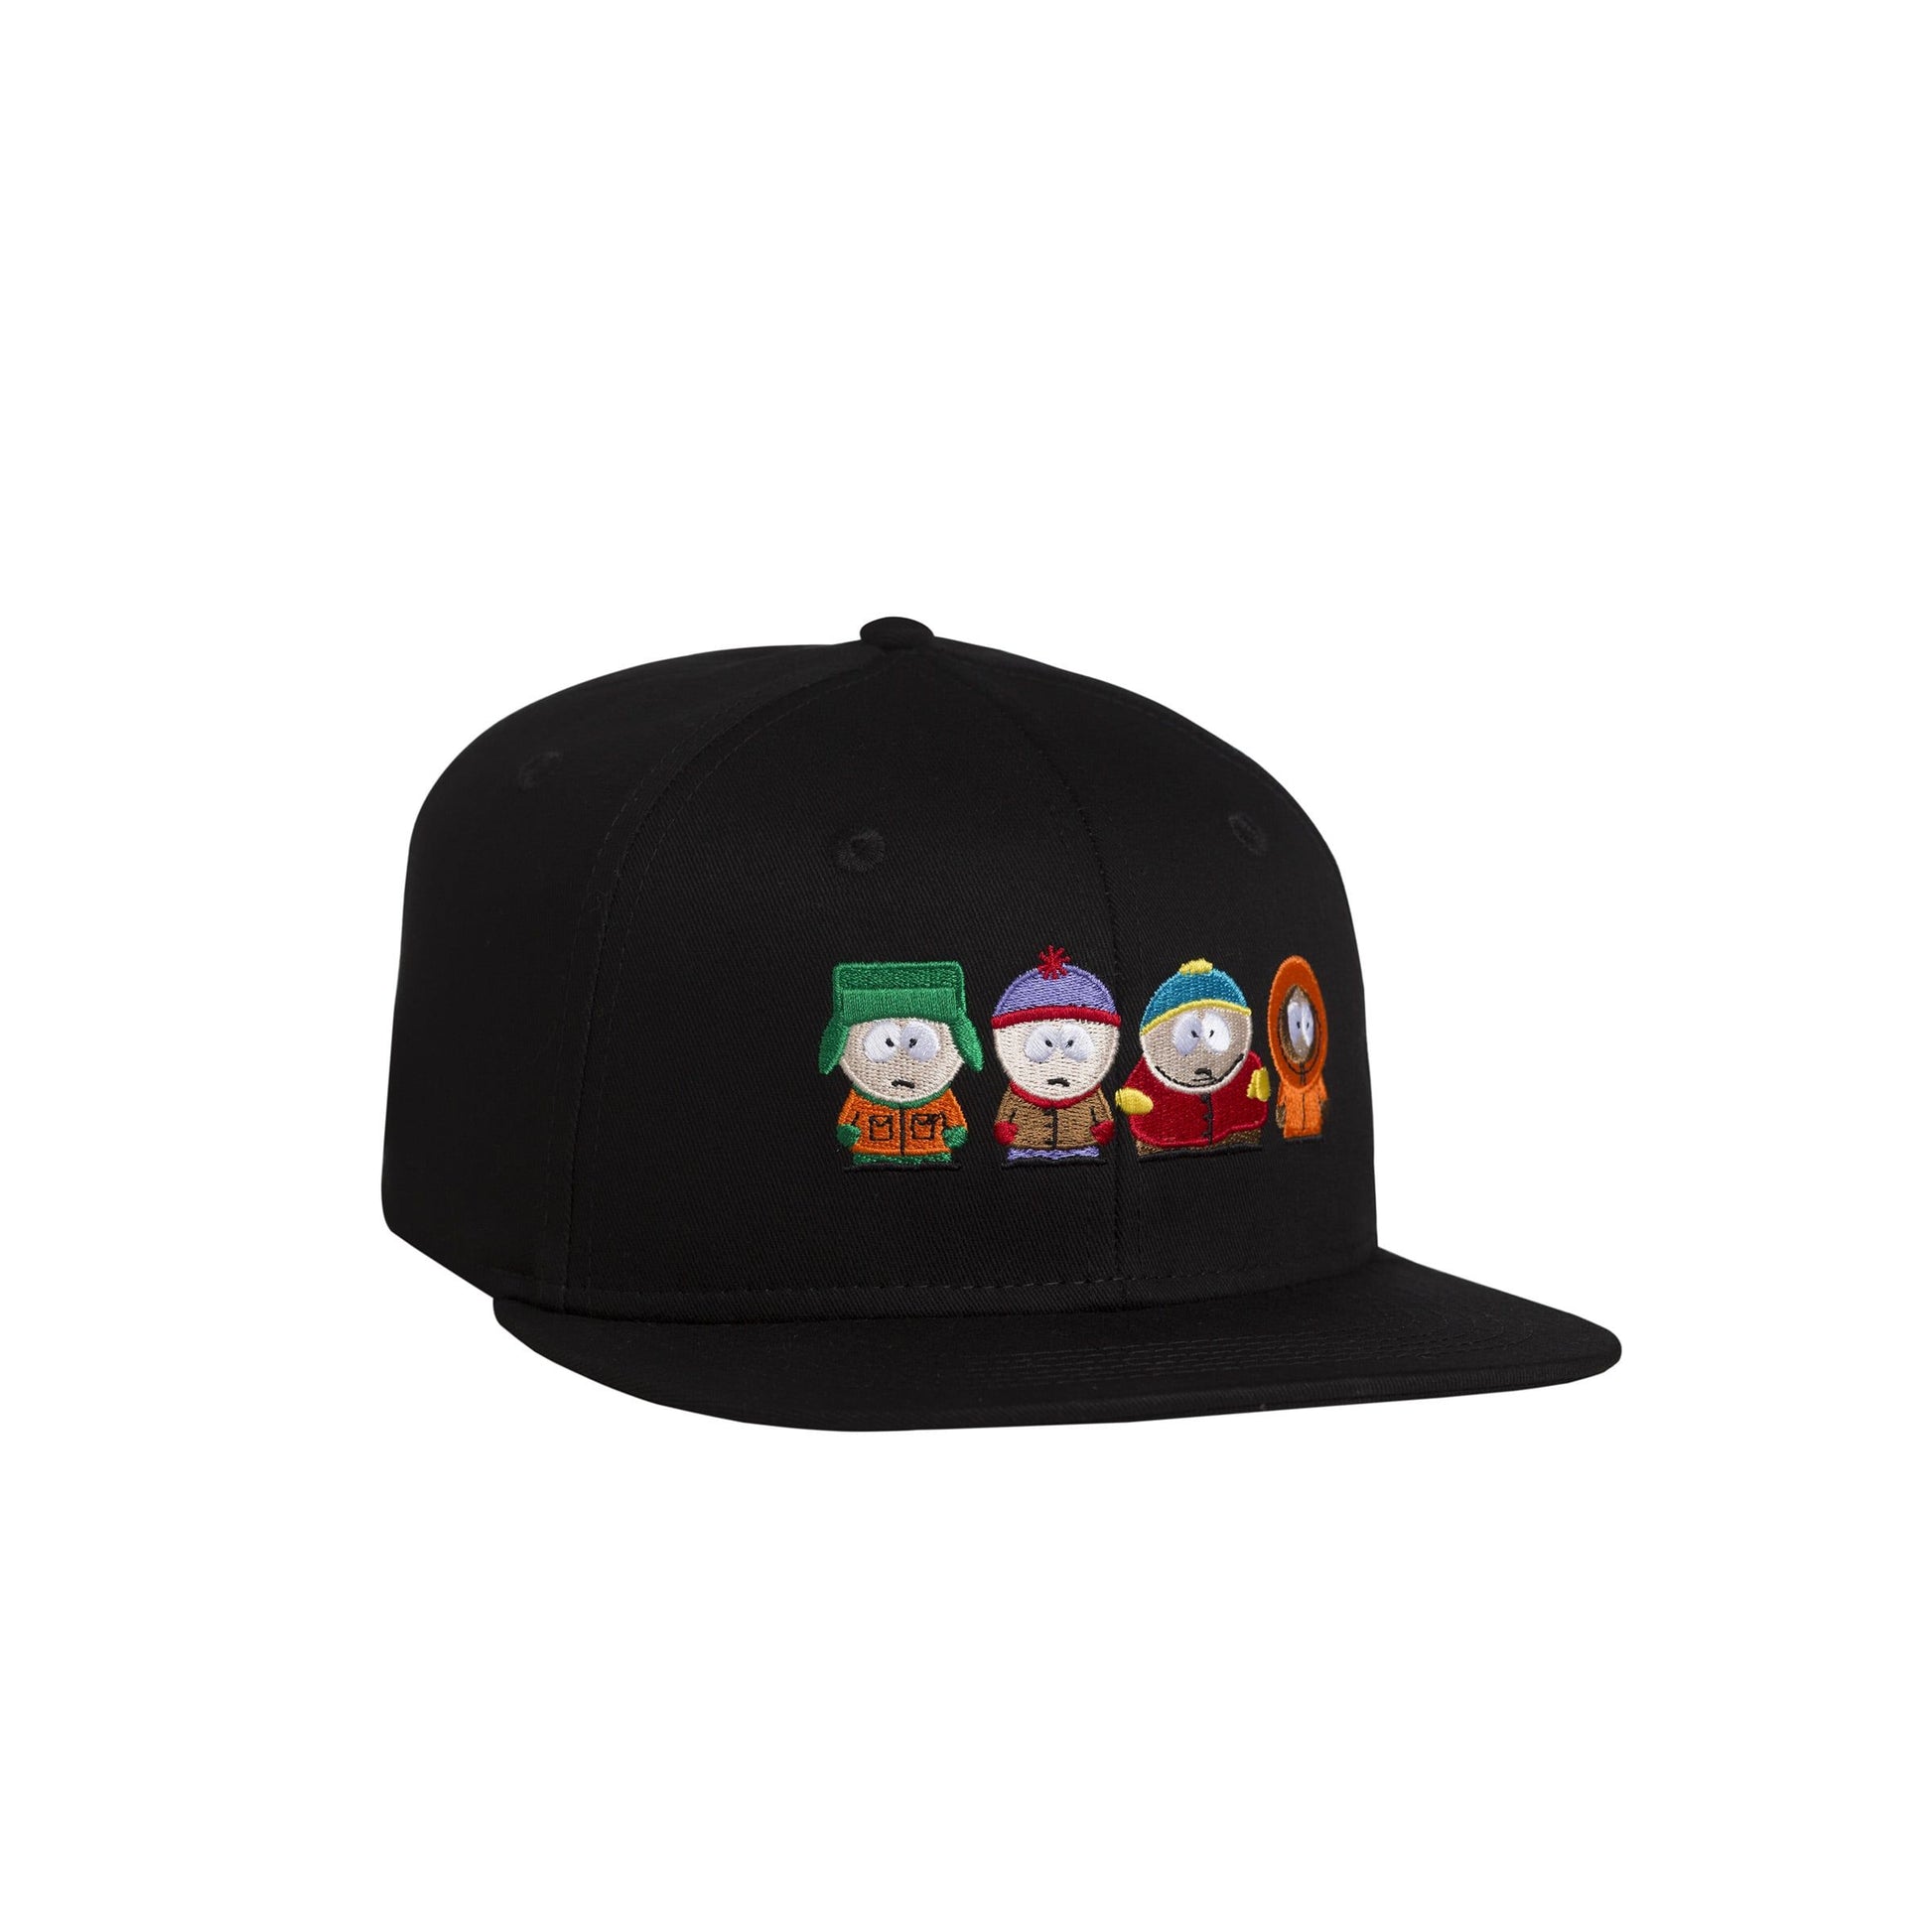 HUF x South Park Strapback Hat, Black - The Giant Peach